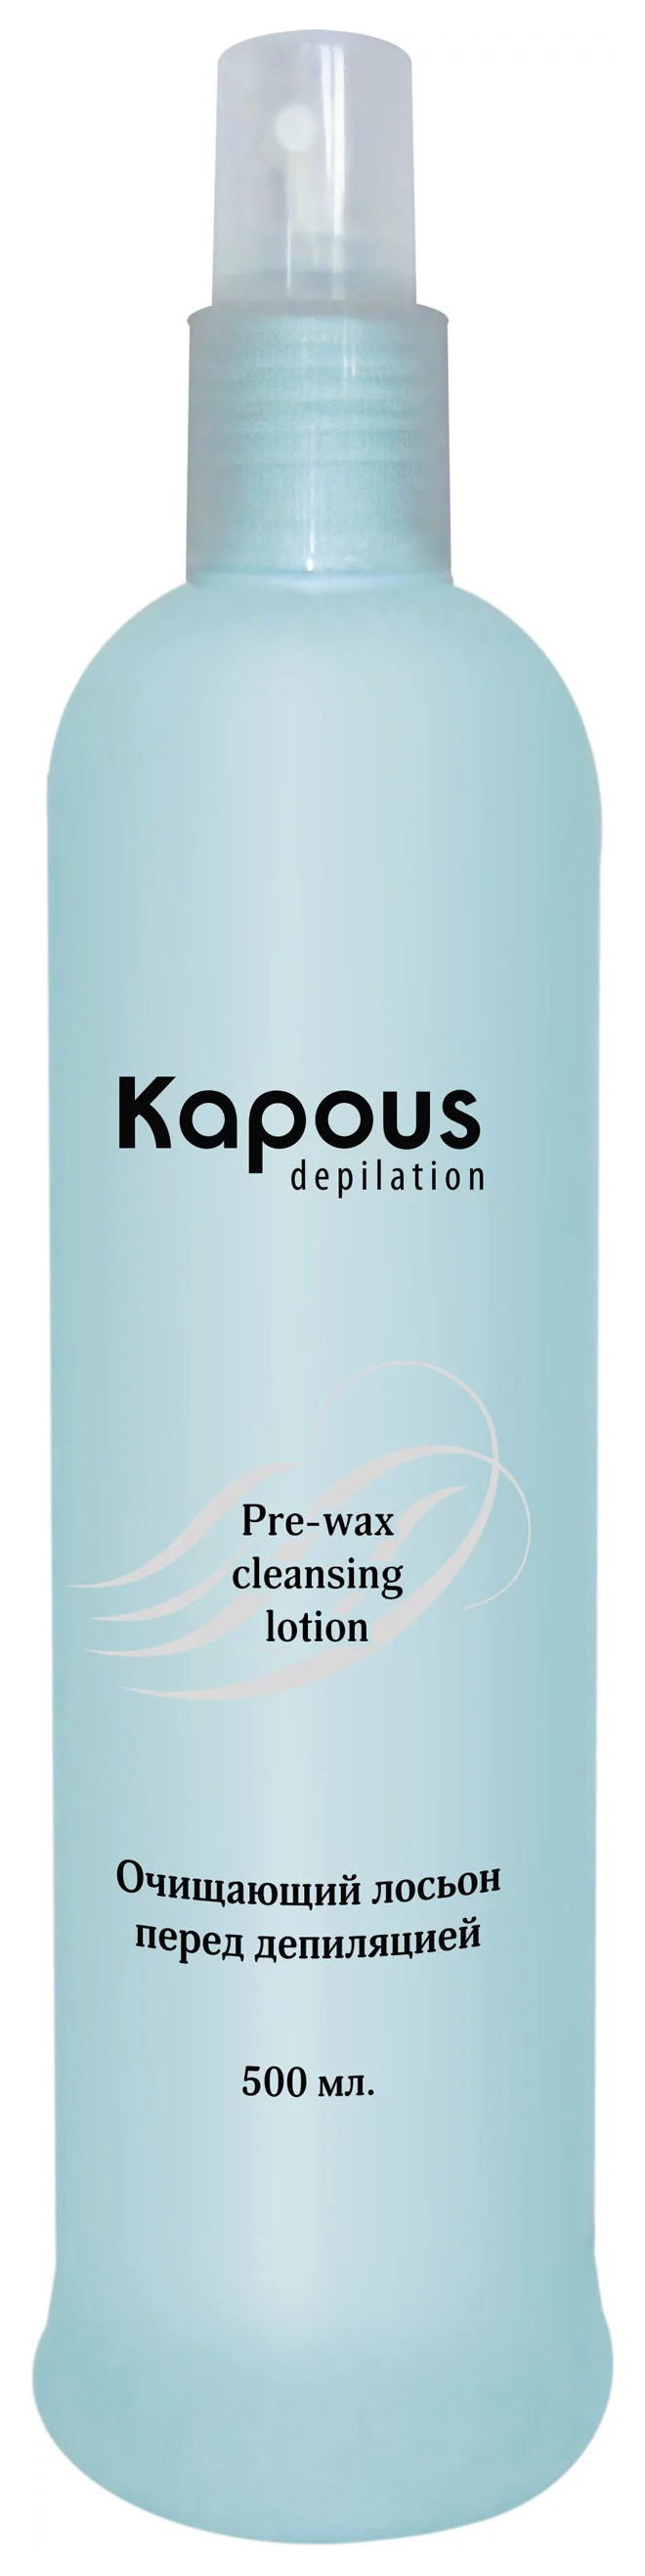 Очищающий лосьон перед депиляцией Kapous Professional 500 мл лосьон очищающий с хлоргексидином